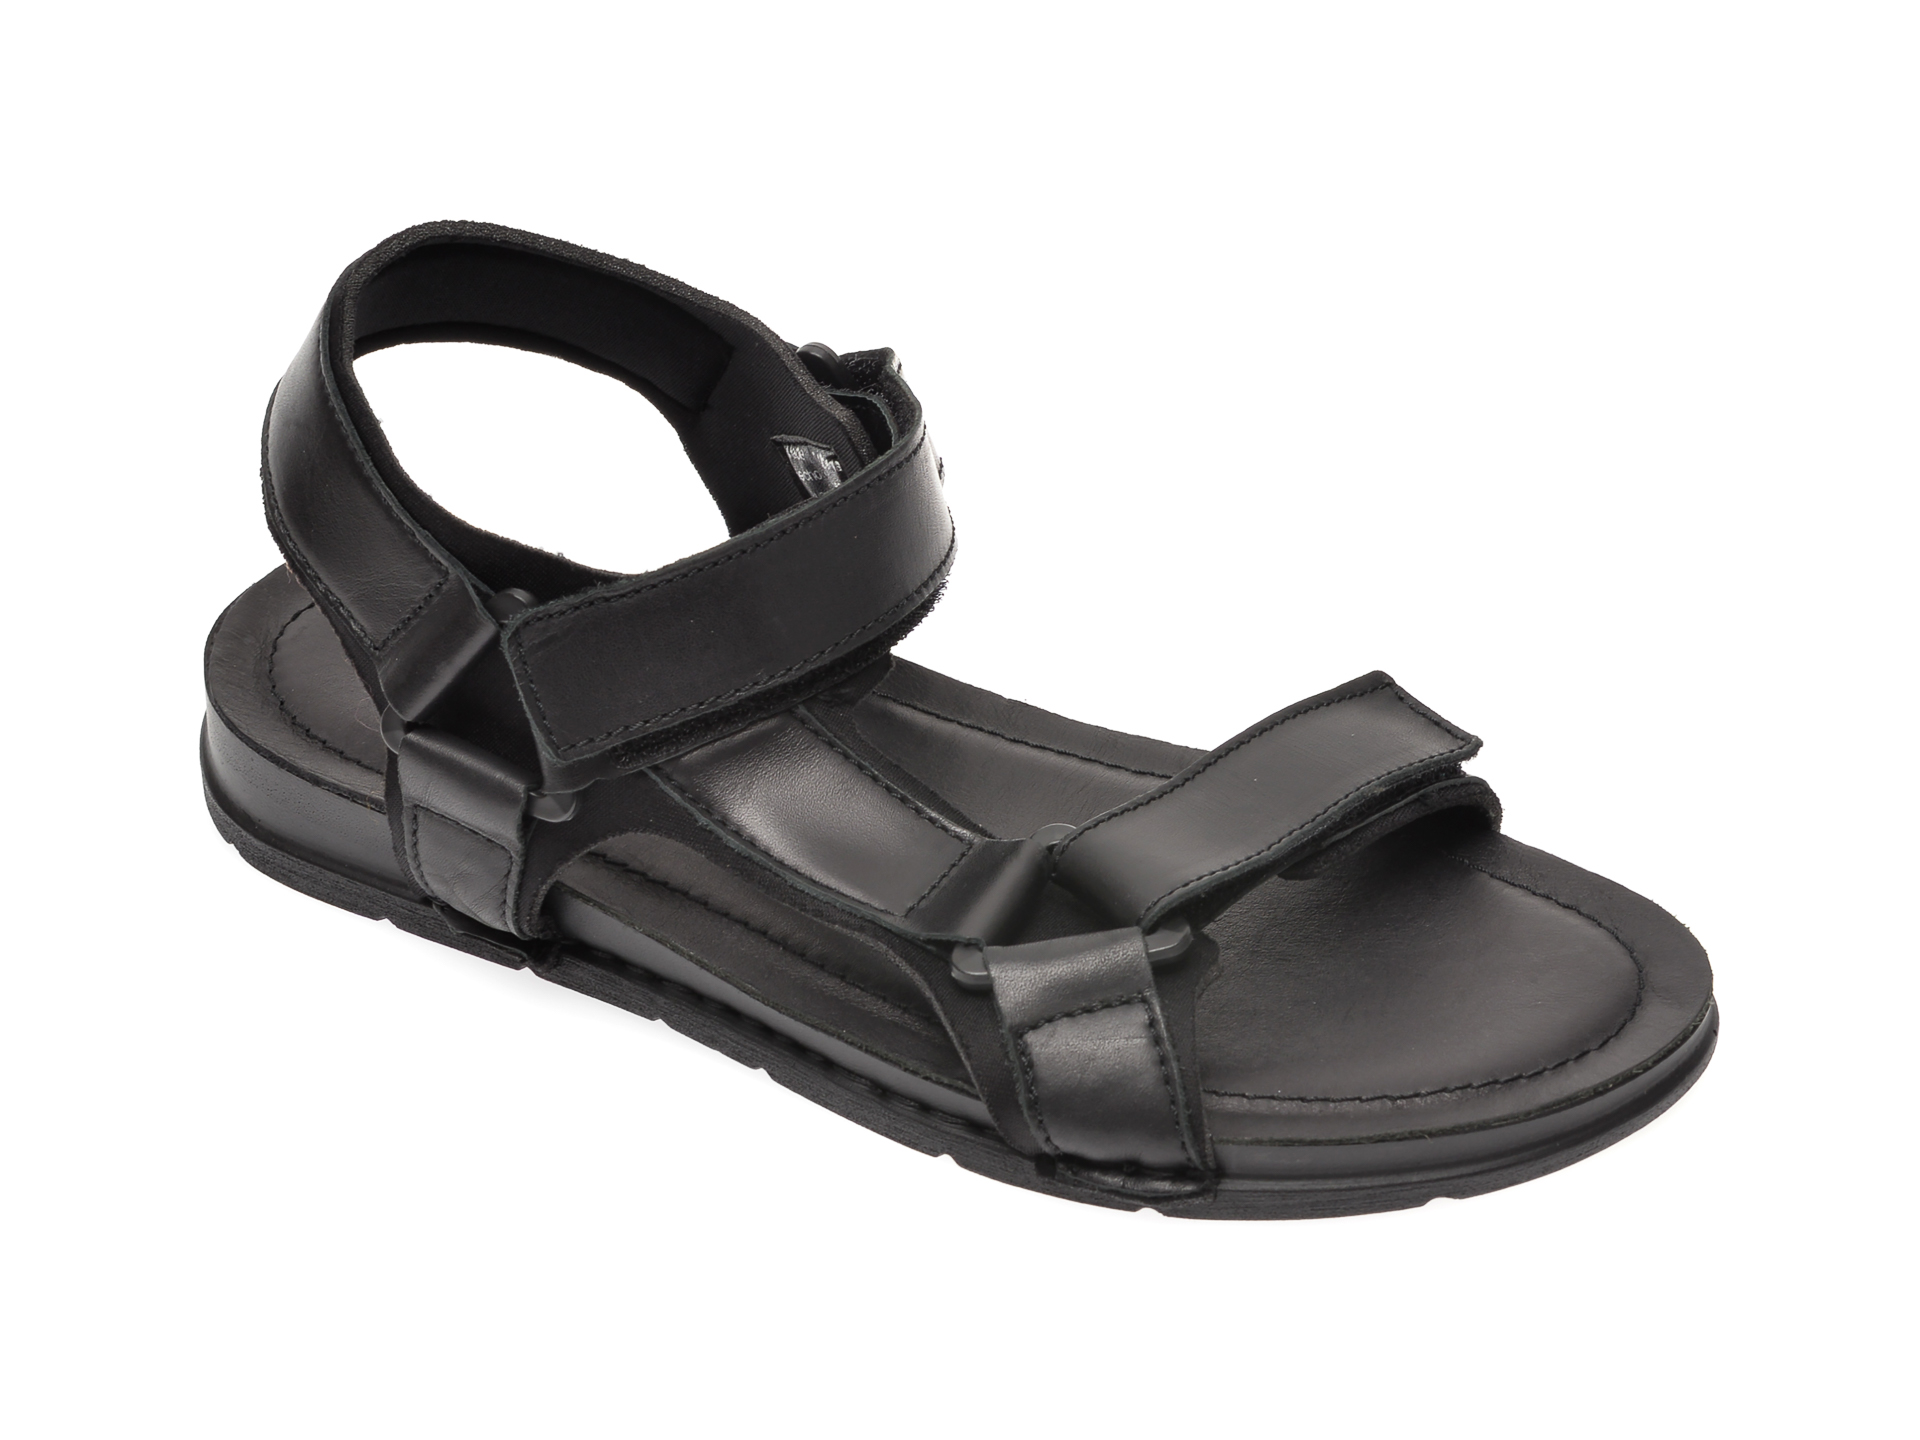 Sandale ALDO negre, Uligolian001, din piele naturala